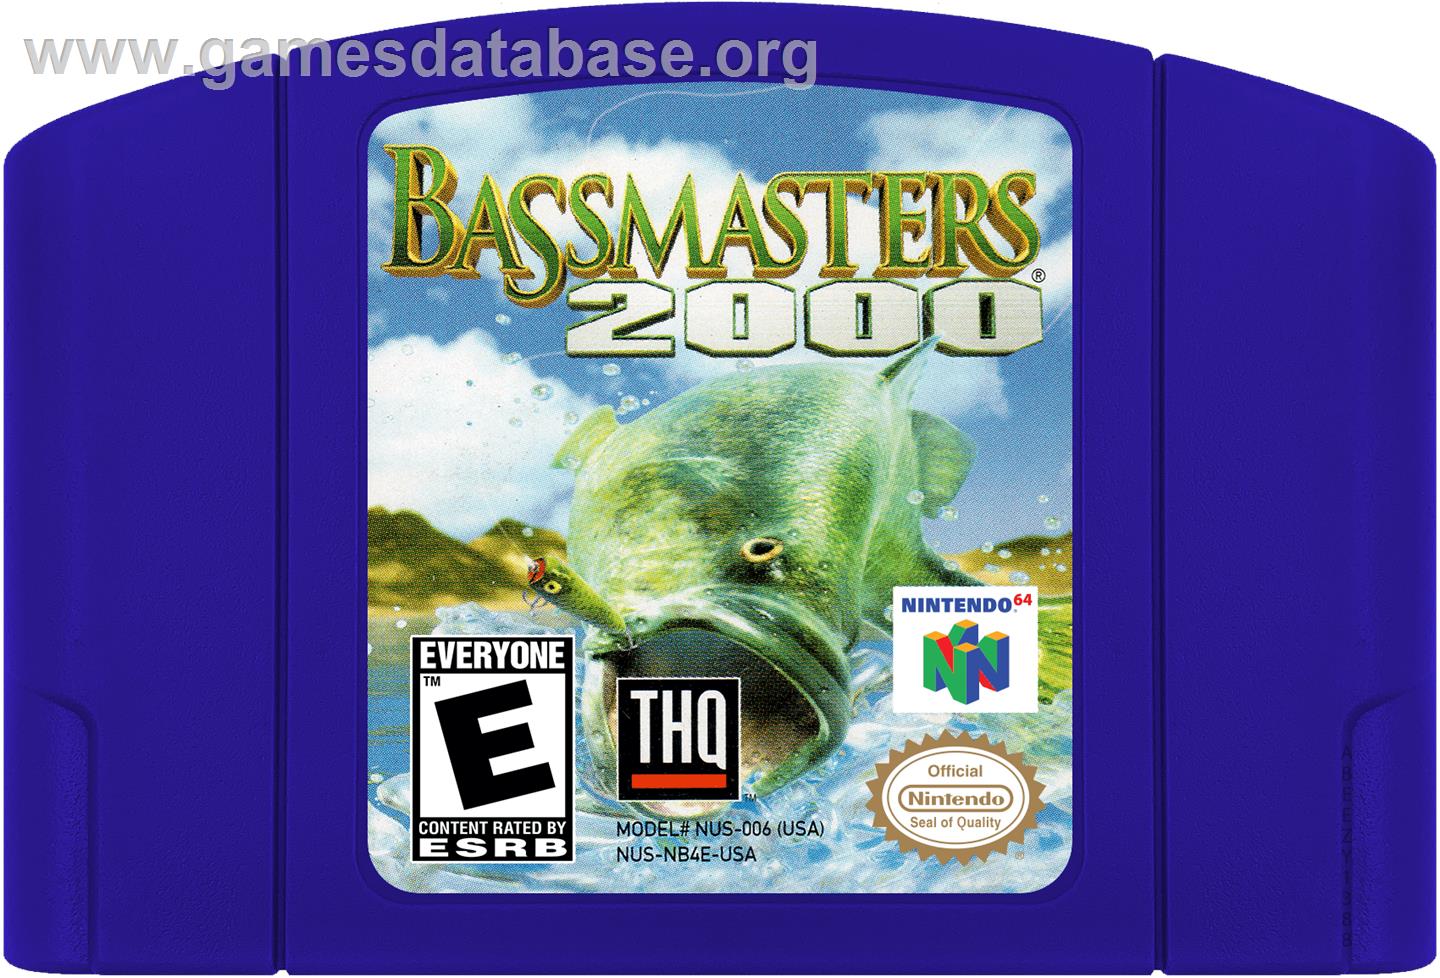 Bassmasters 2000 - Nintendo N64 - Artwork - Cartridge